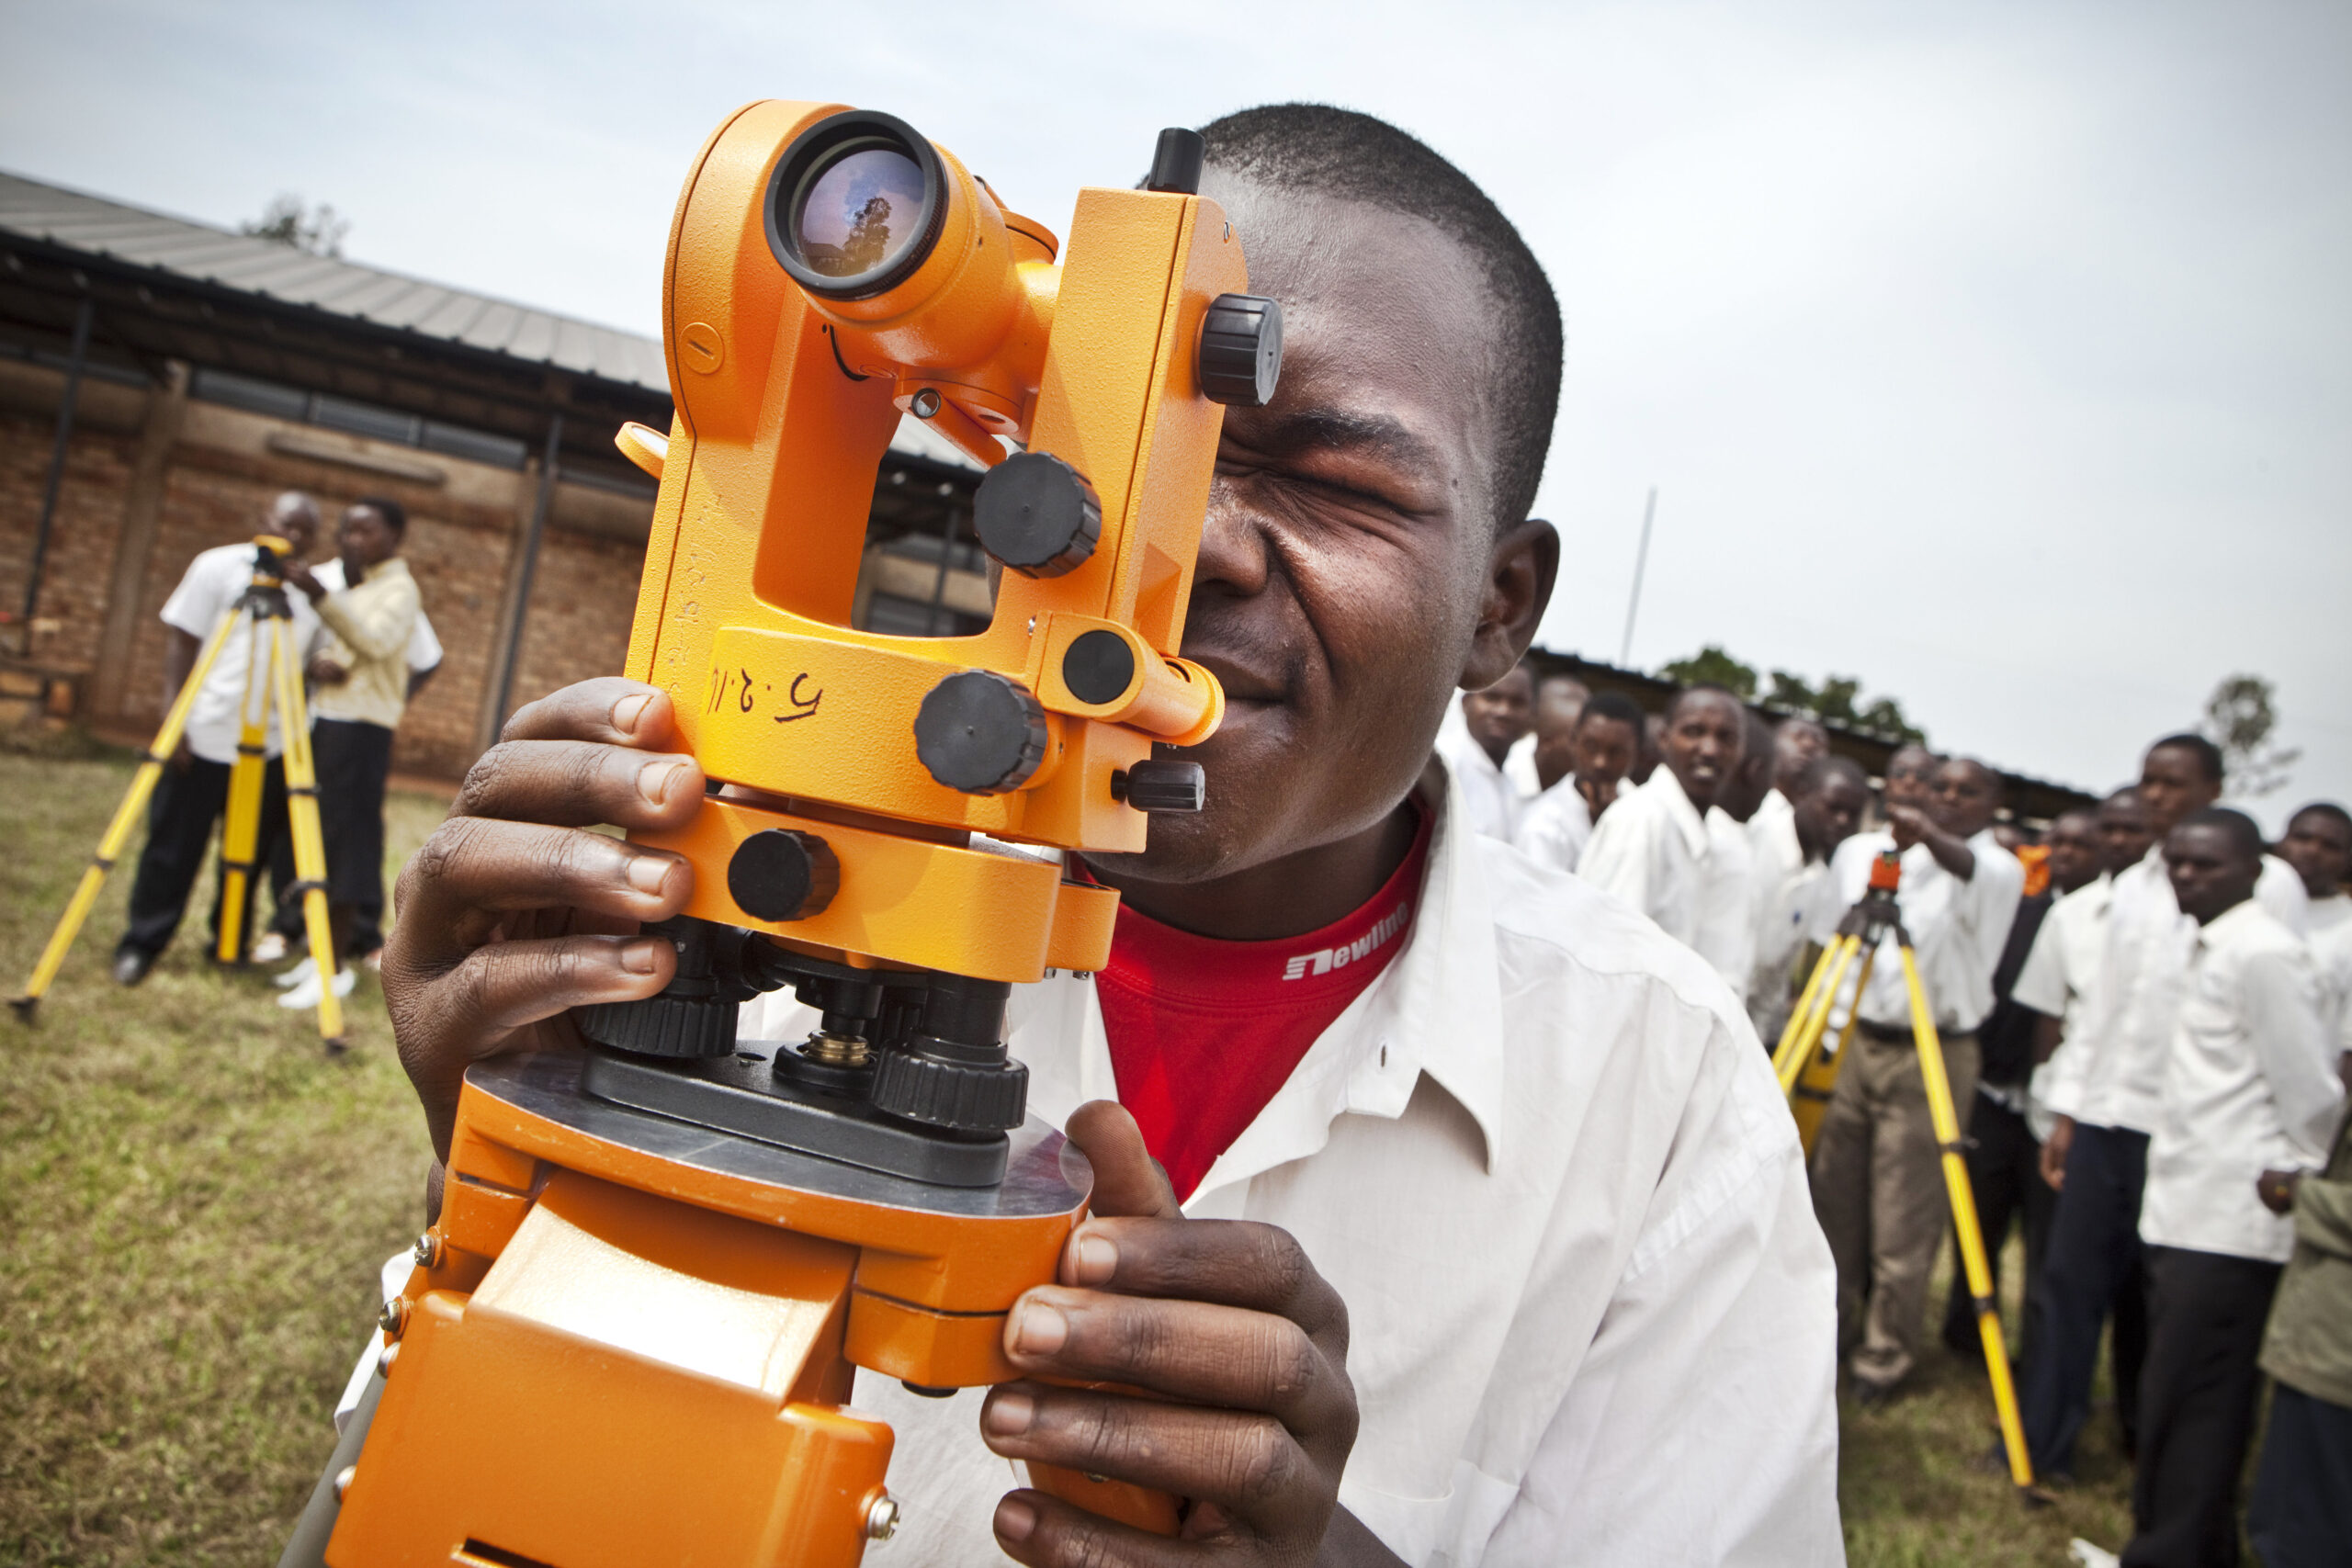 Surveyor's apprentice in Burundi looks into a surveying machine